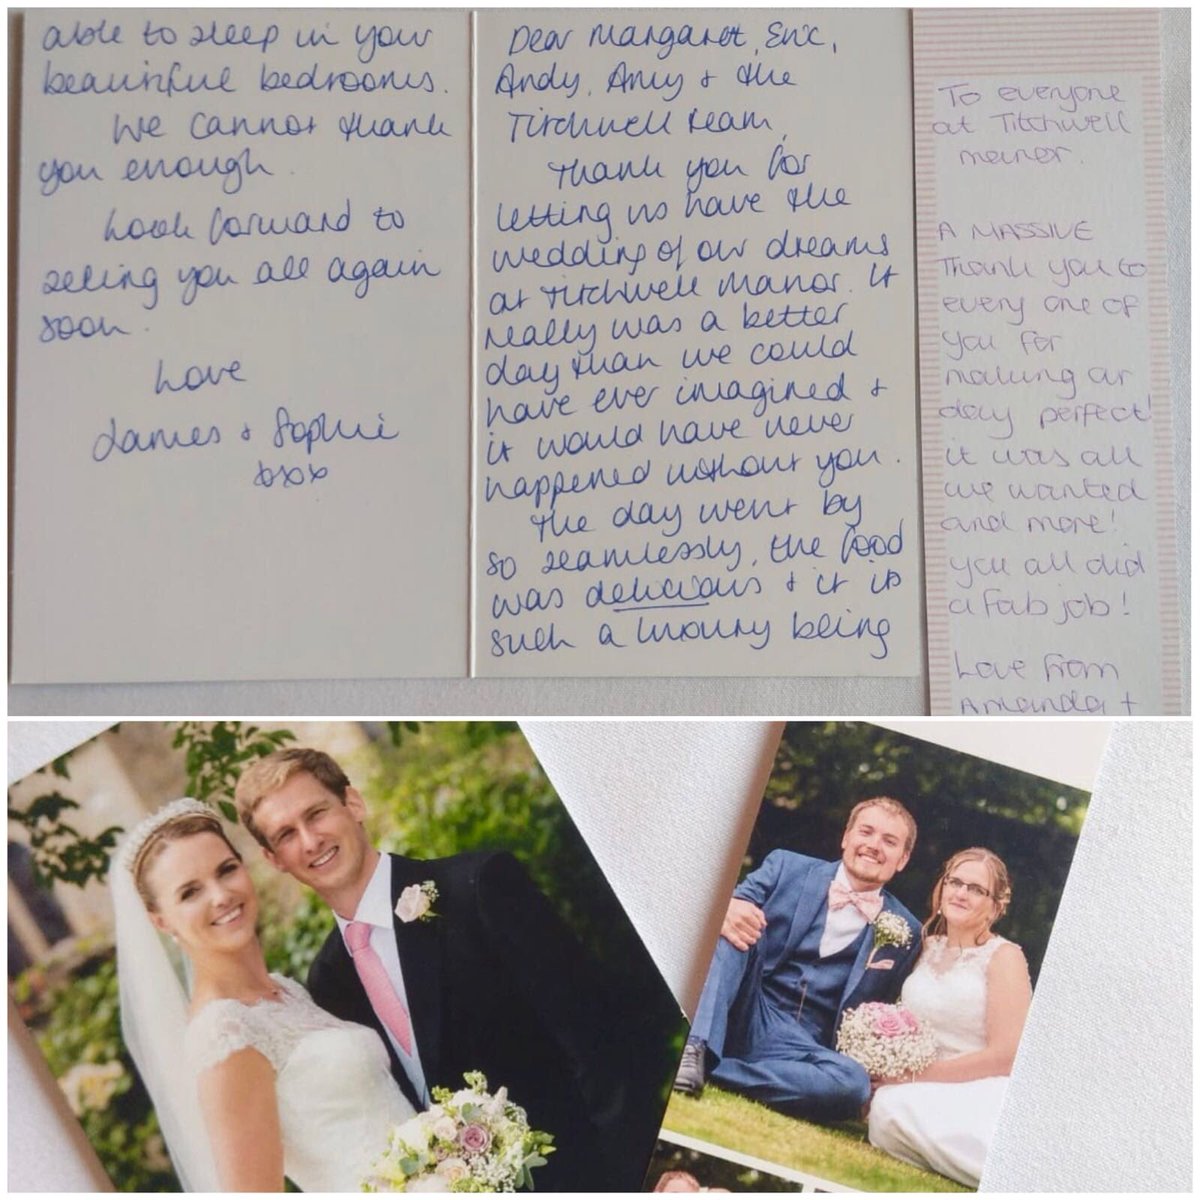 Wonderful wedding feedback! #loveweddings #newlyweds #norfolk